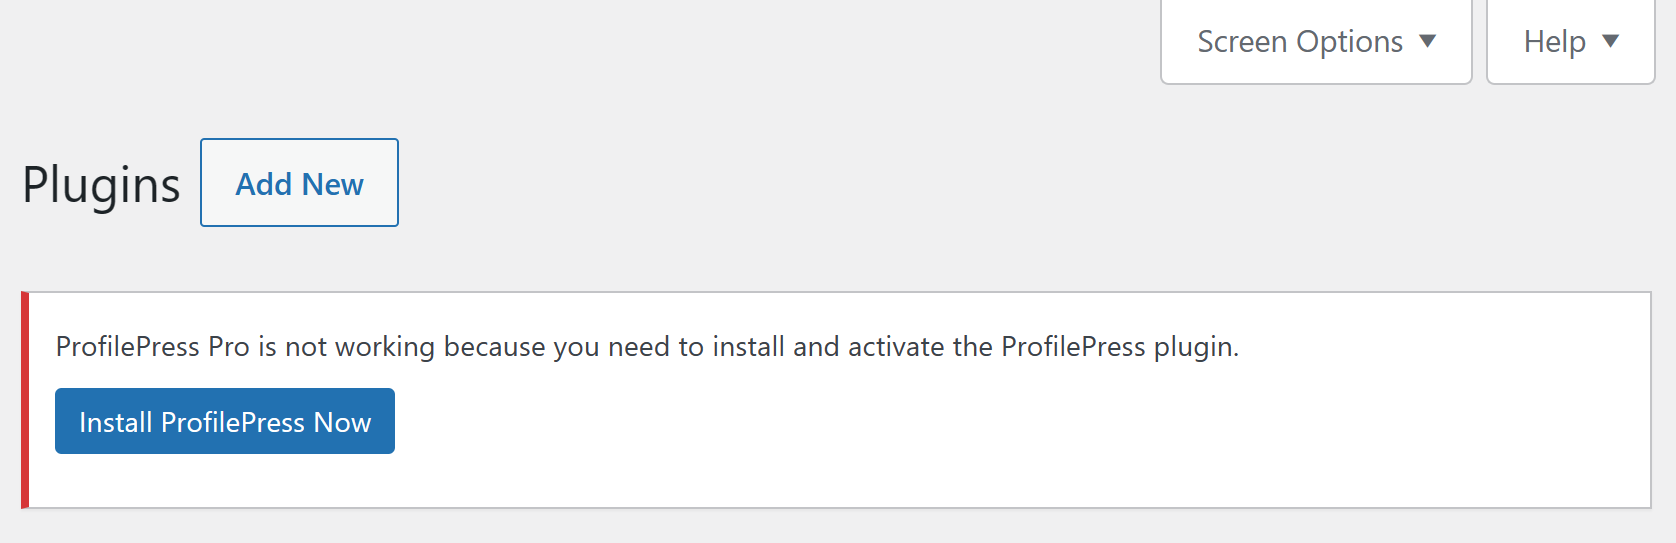 Install core version of ProfilePress